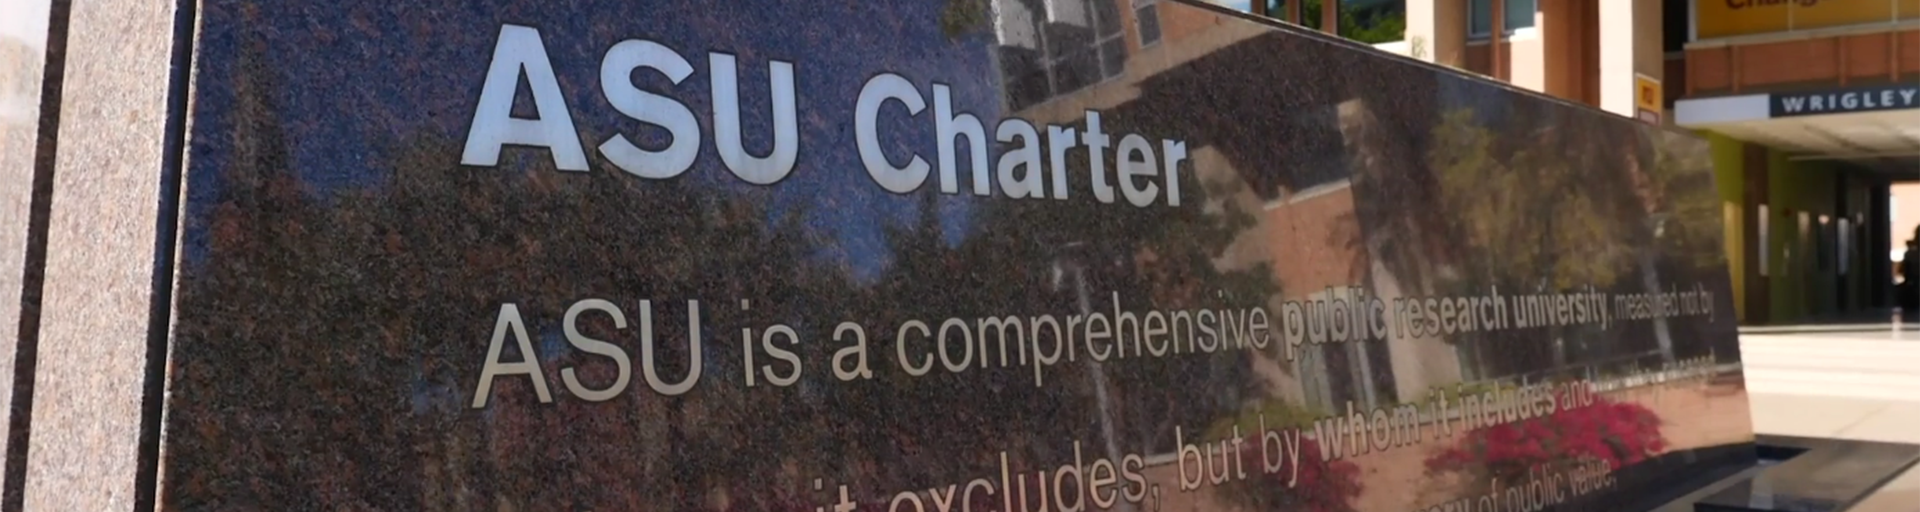 ASU charter sign